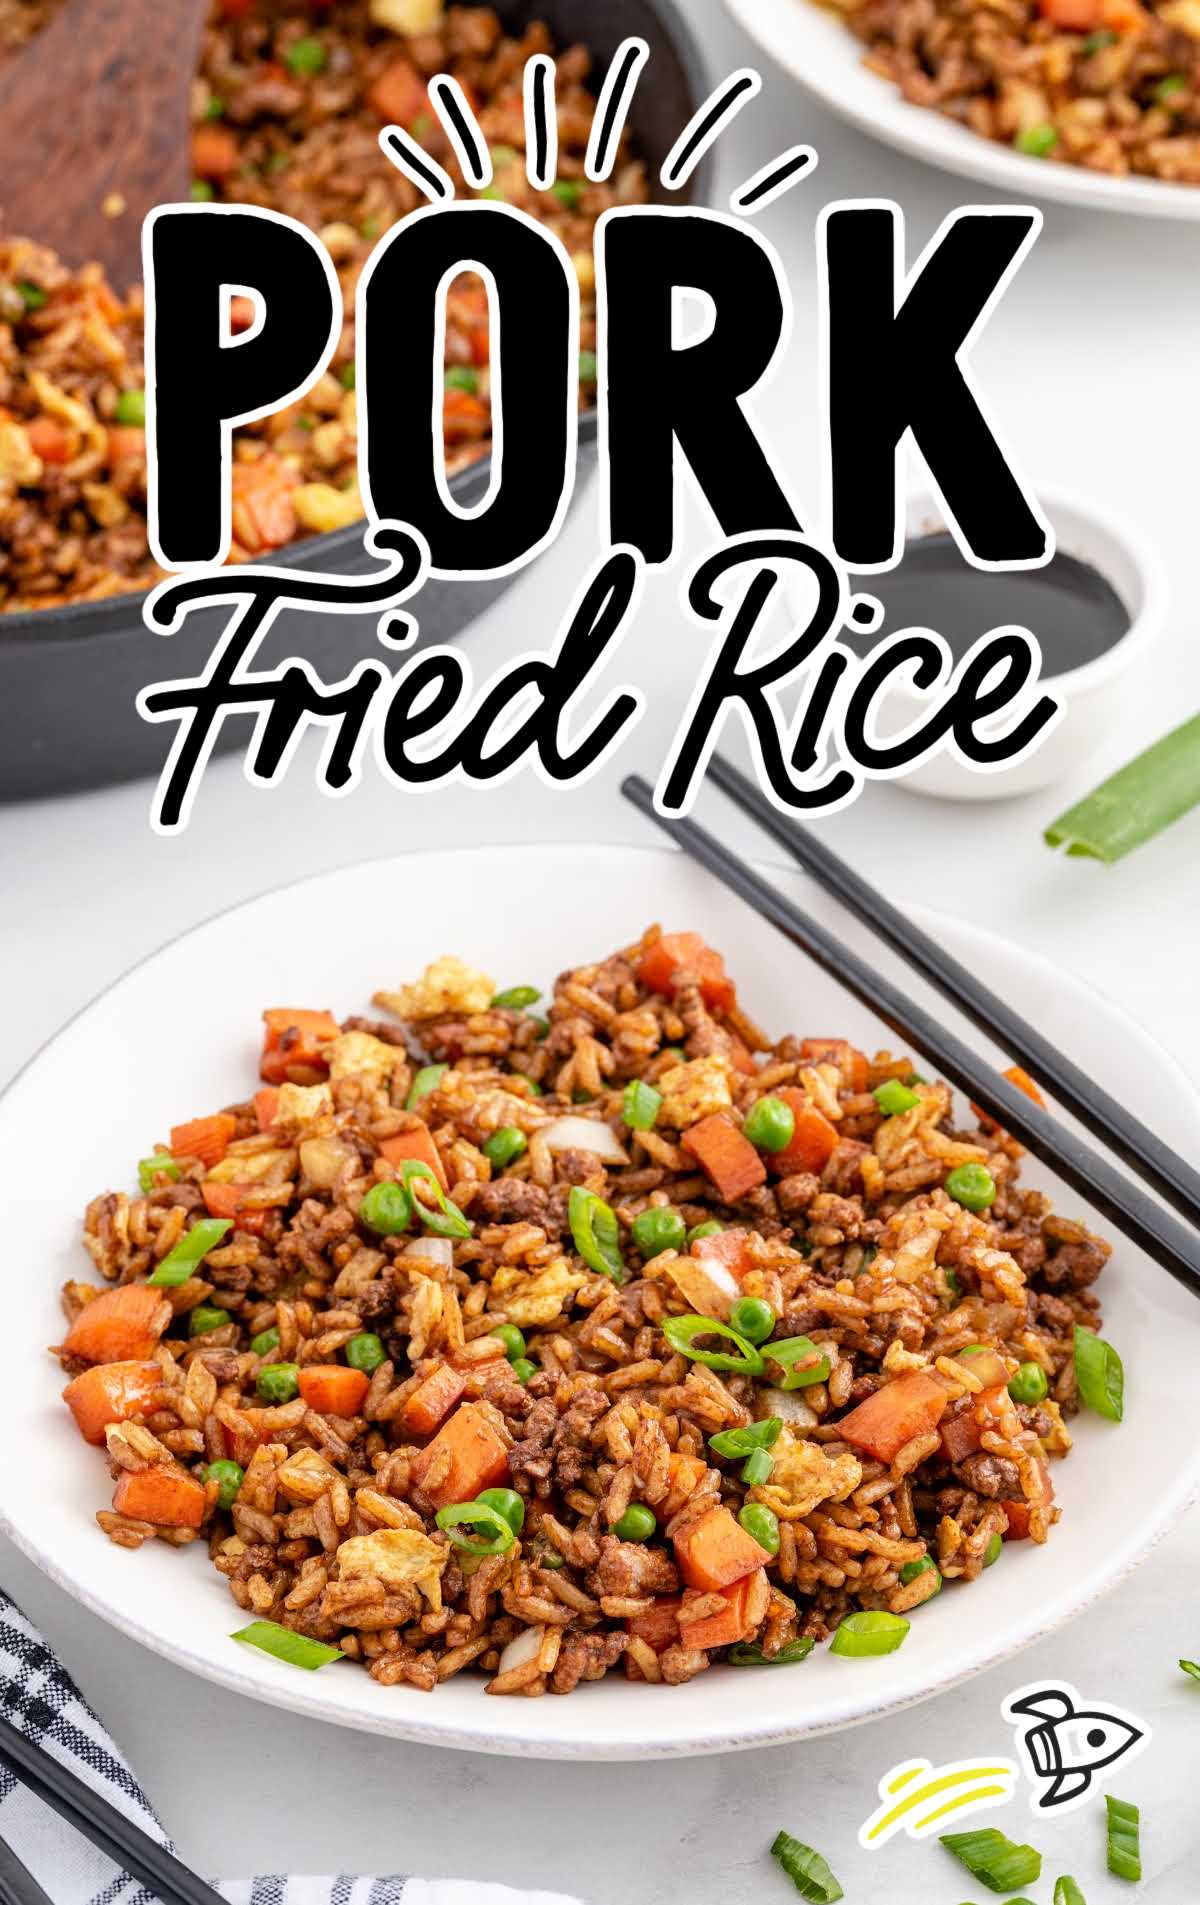 close up shot of a plate of Pork Fried Rice with chopsticks